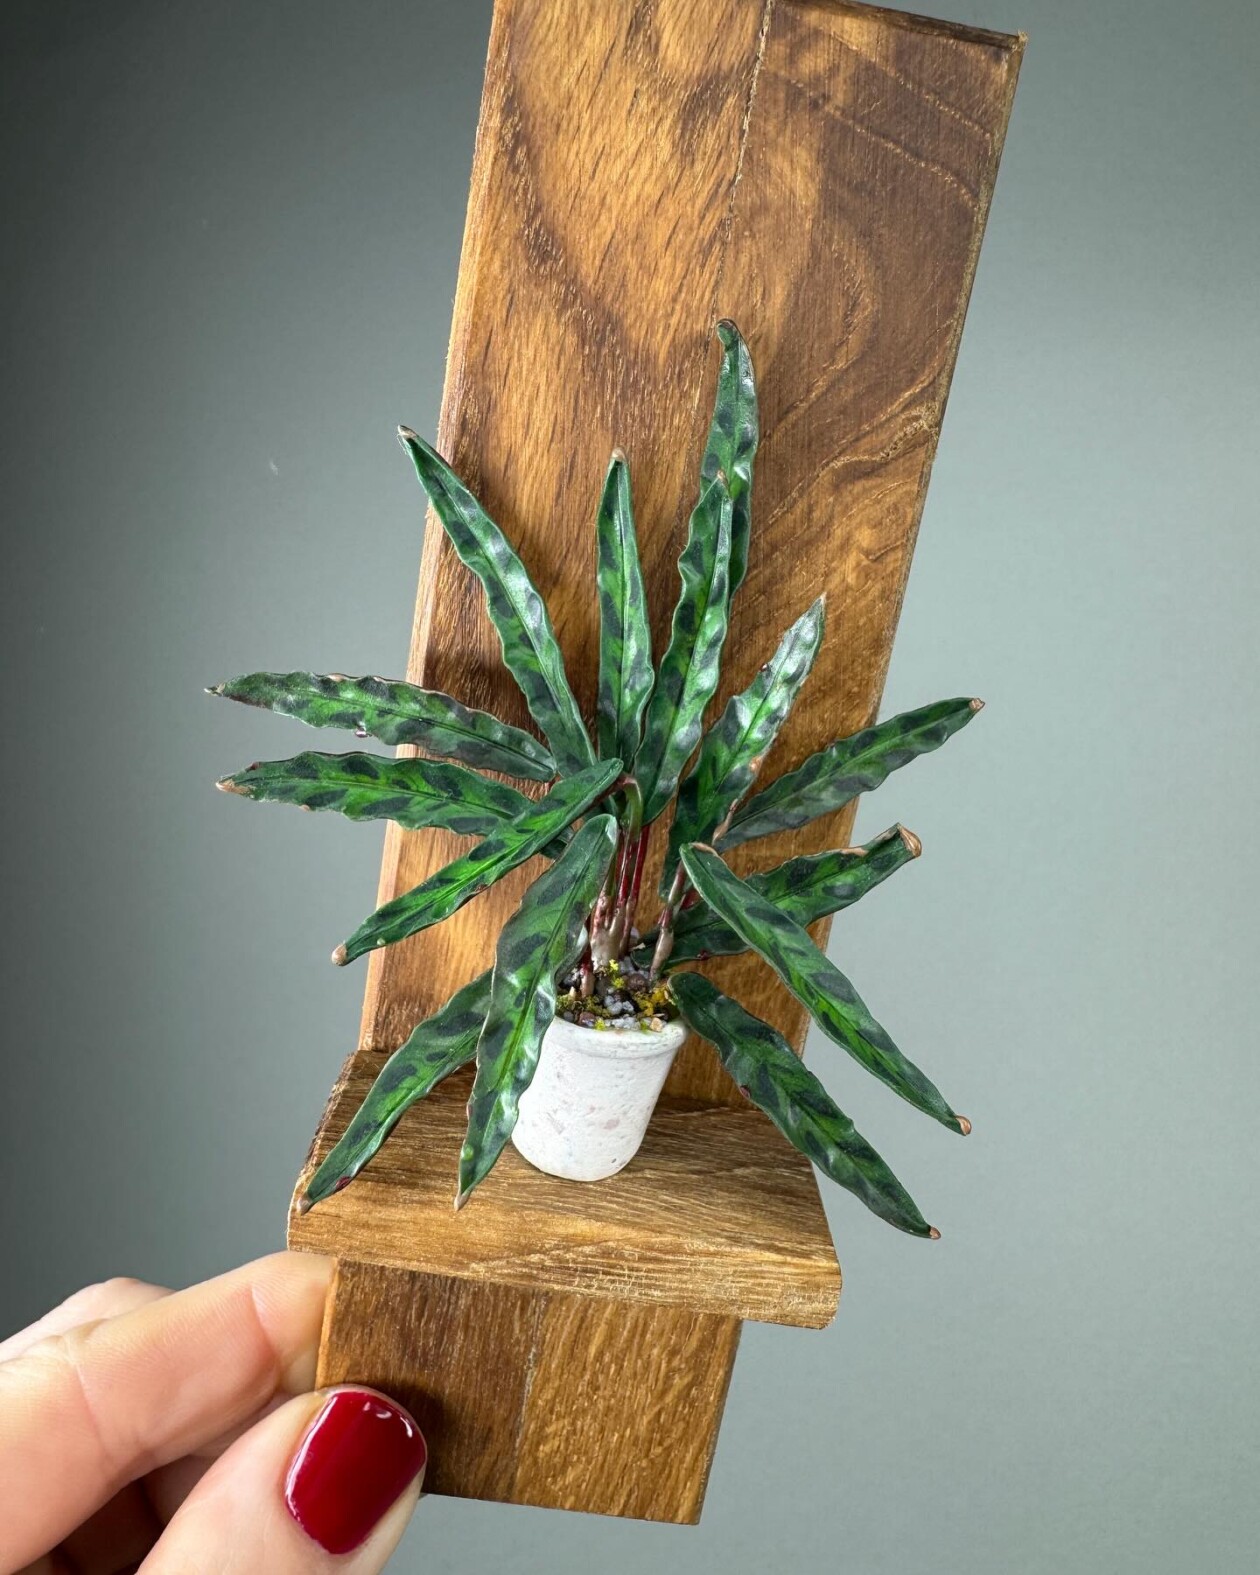 Handmade Miniature Polymer Clay Plants By Astrid Wilk (18)